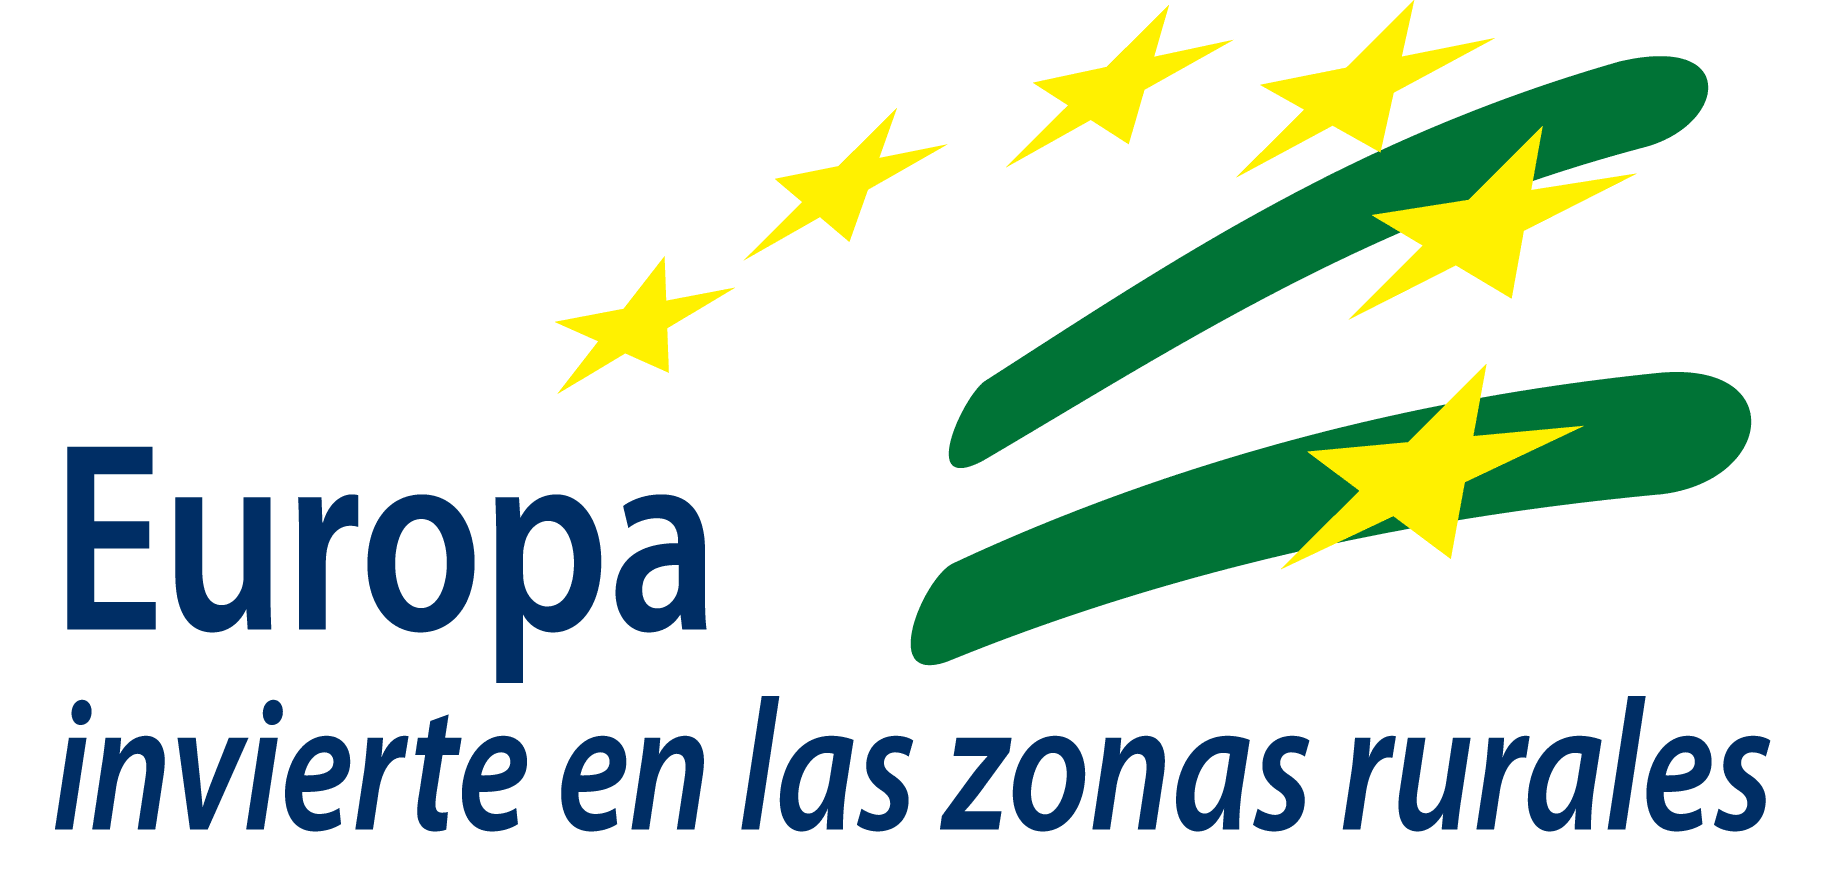 https://www.juntadeandalucia.es/agriculturaypesca/ifapa/-/fitem/513ab150-ade0-11e7-9436-582f2a11f274/1_EUROPA_invierterural1.gif